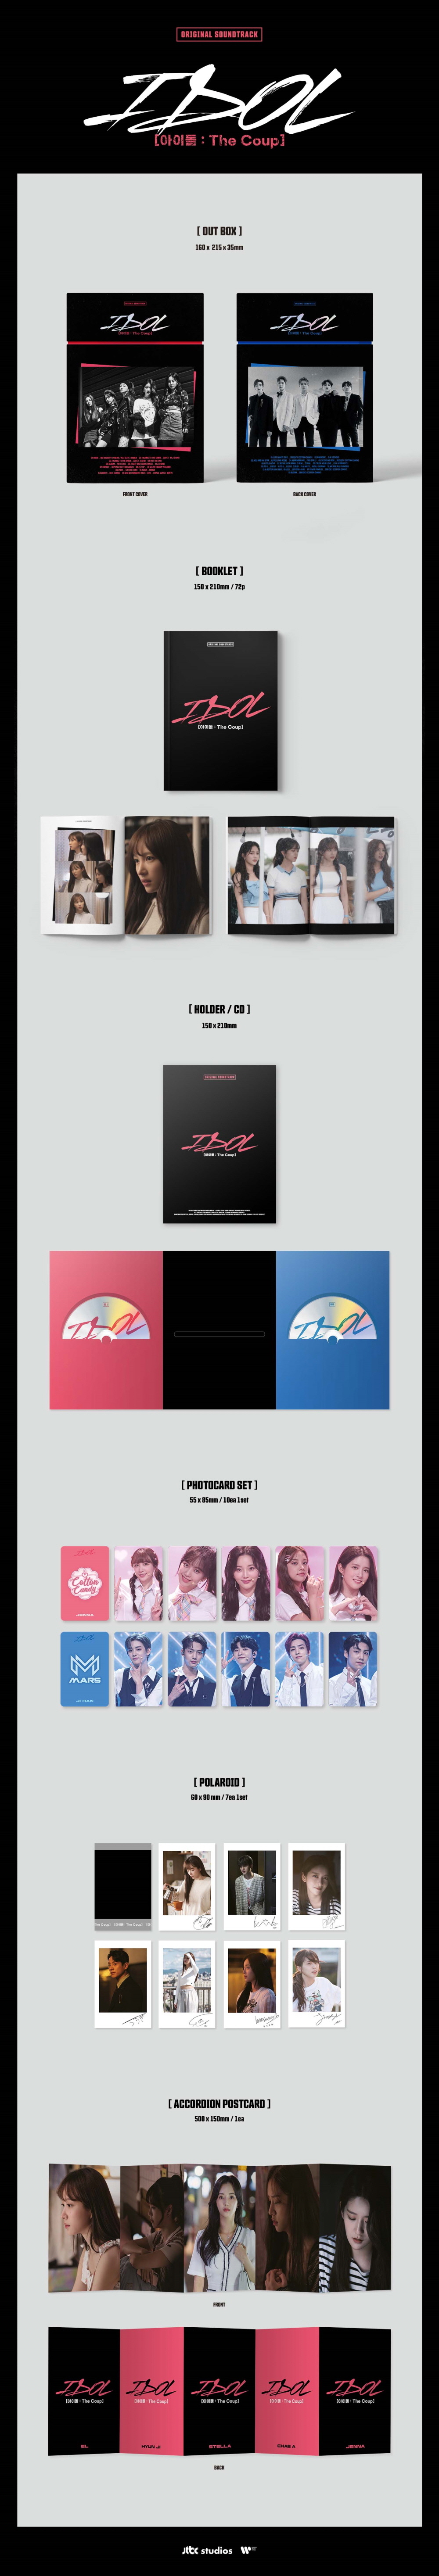 IDOL (IDOL : The Coup) OST - Various Artists album kpop idol ost photobook ostalbum photocard idolalbum idolostalbum